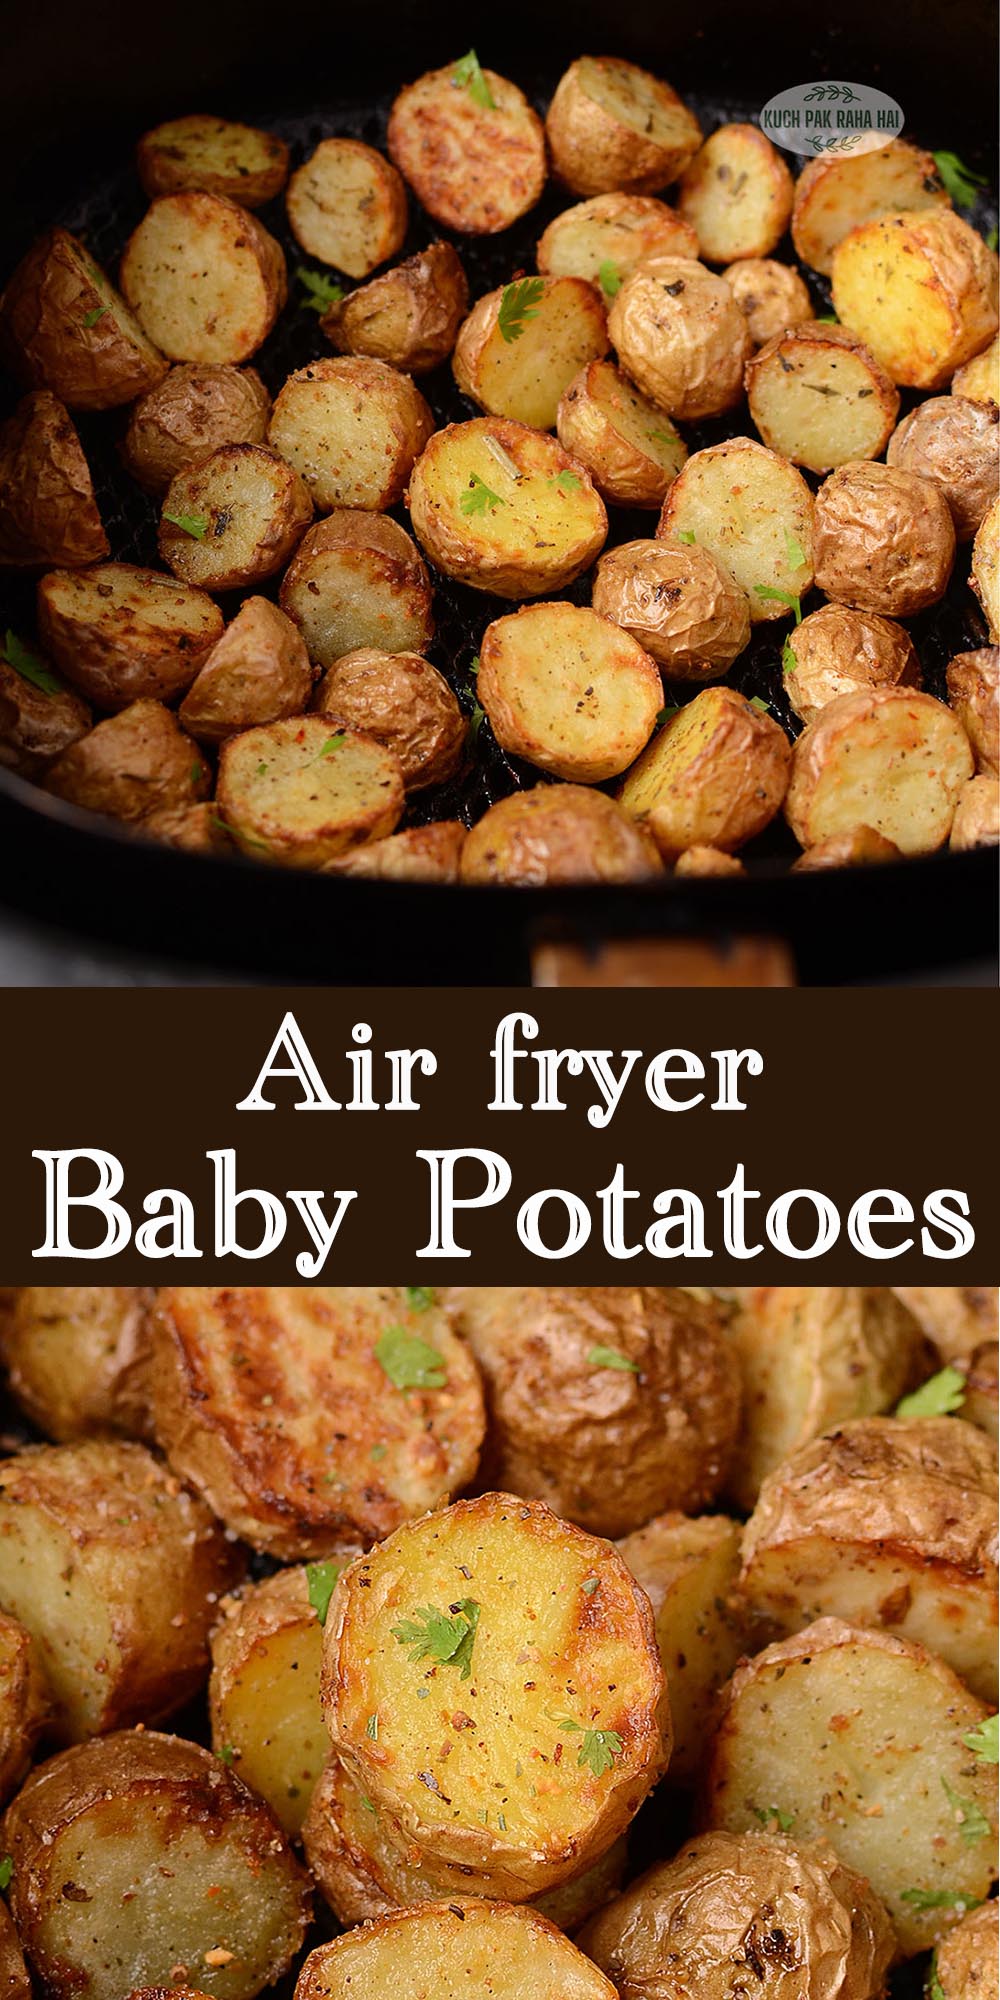 Baby potatoes roasted in air fryer.